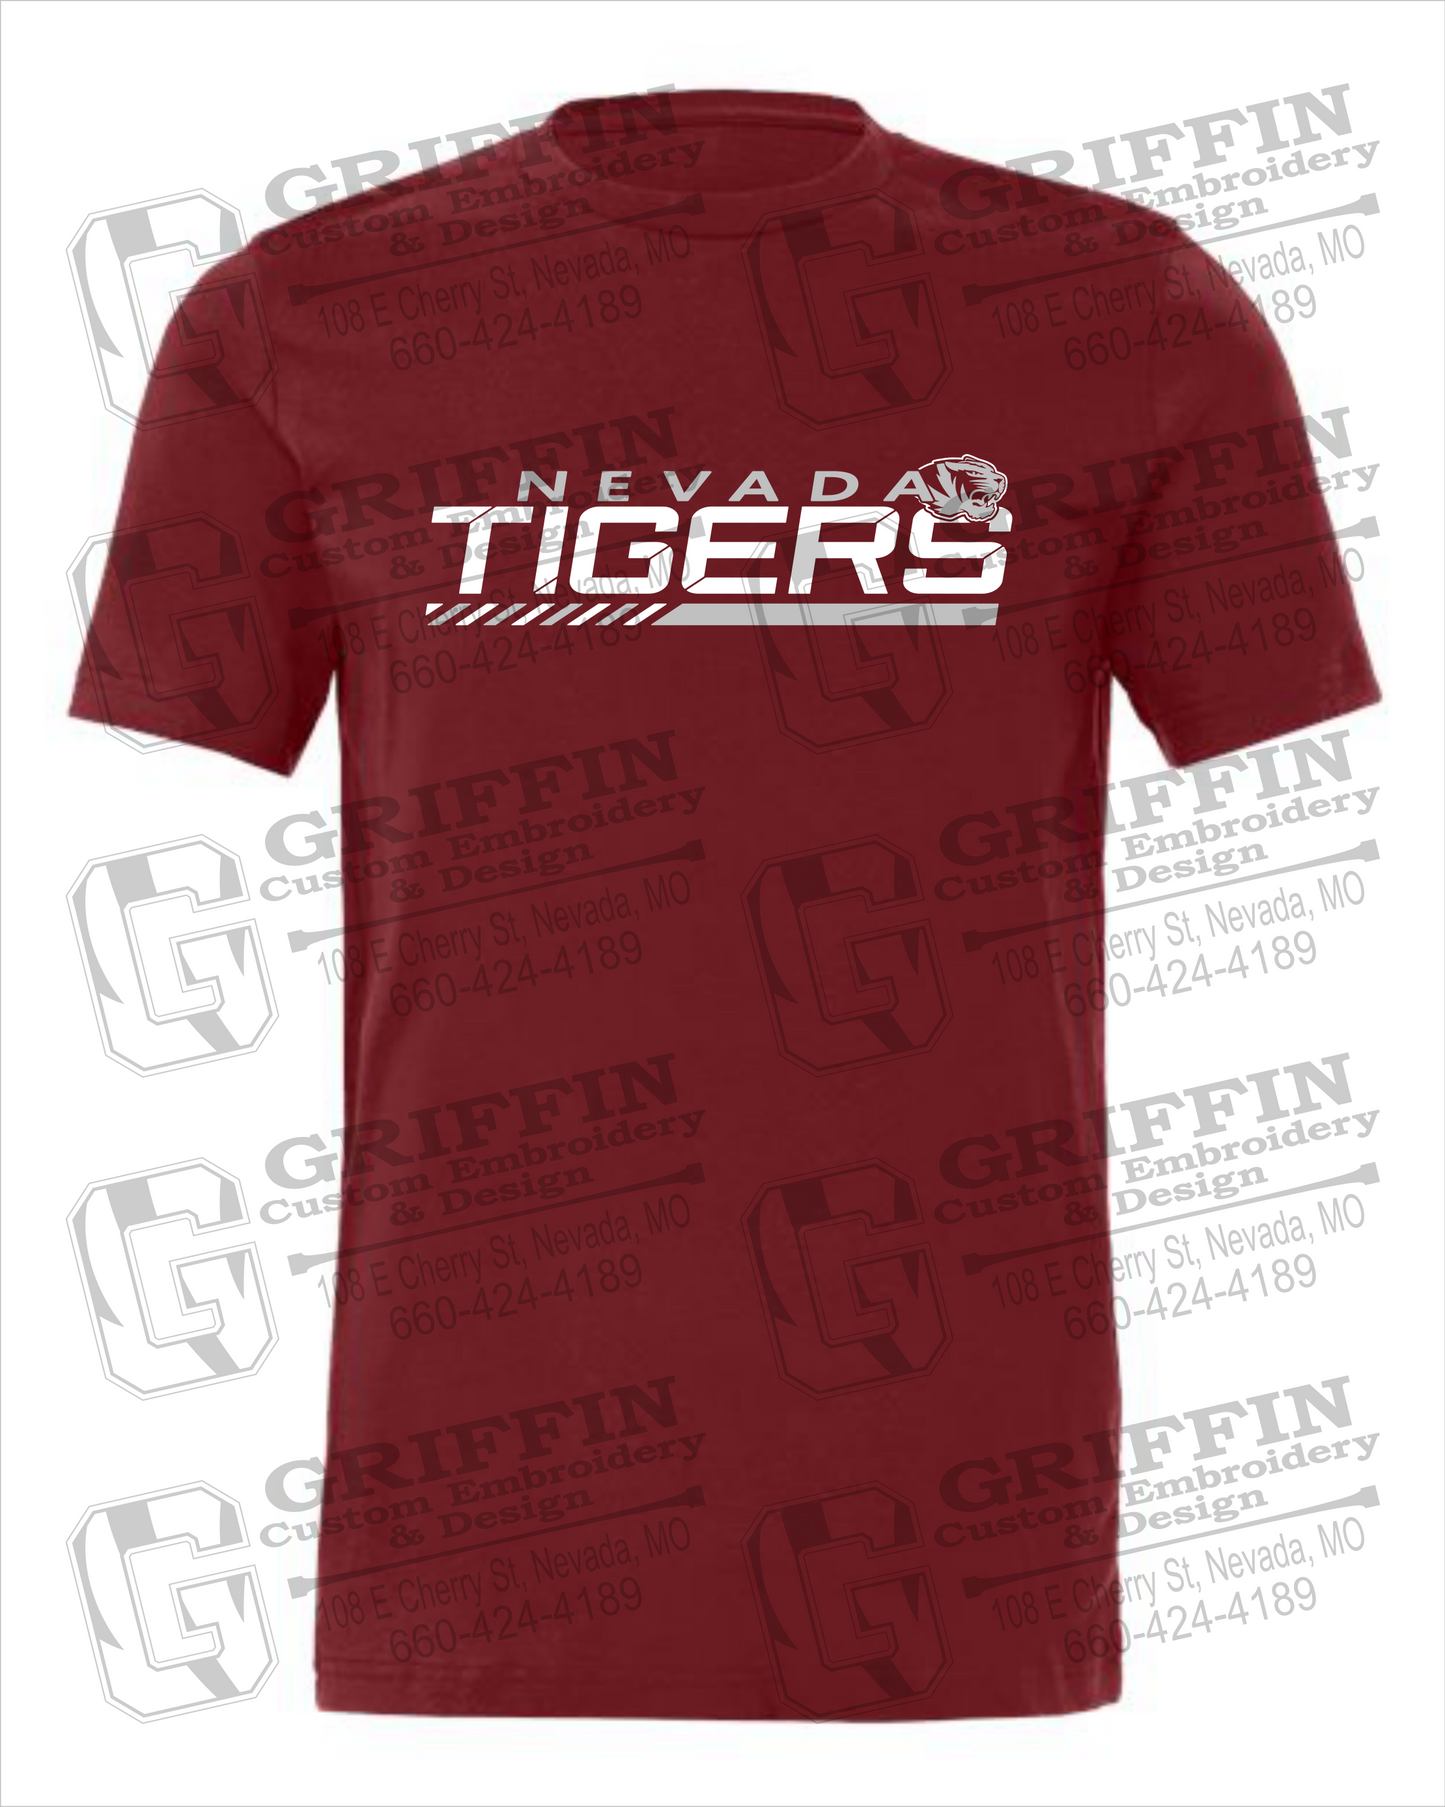 Nevada Tigers 22-E 100% Cotton Short Sleeve T-Shirt